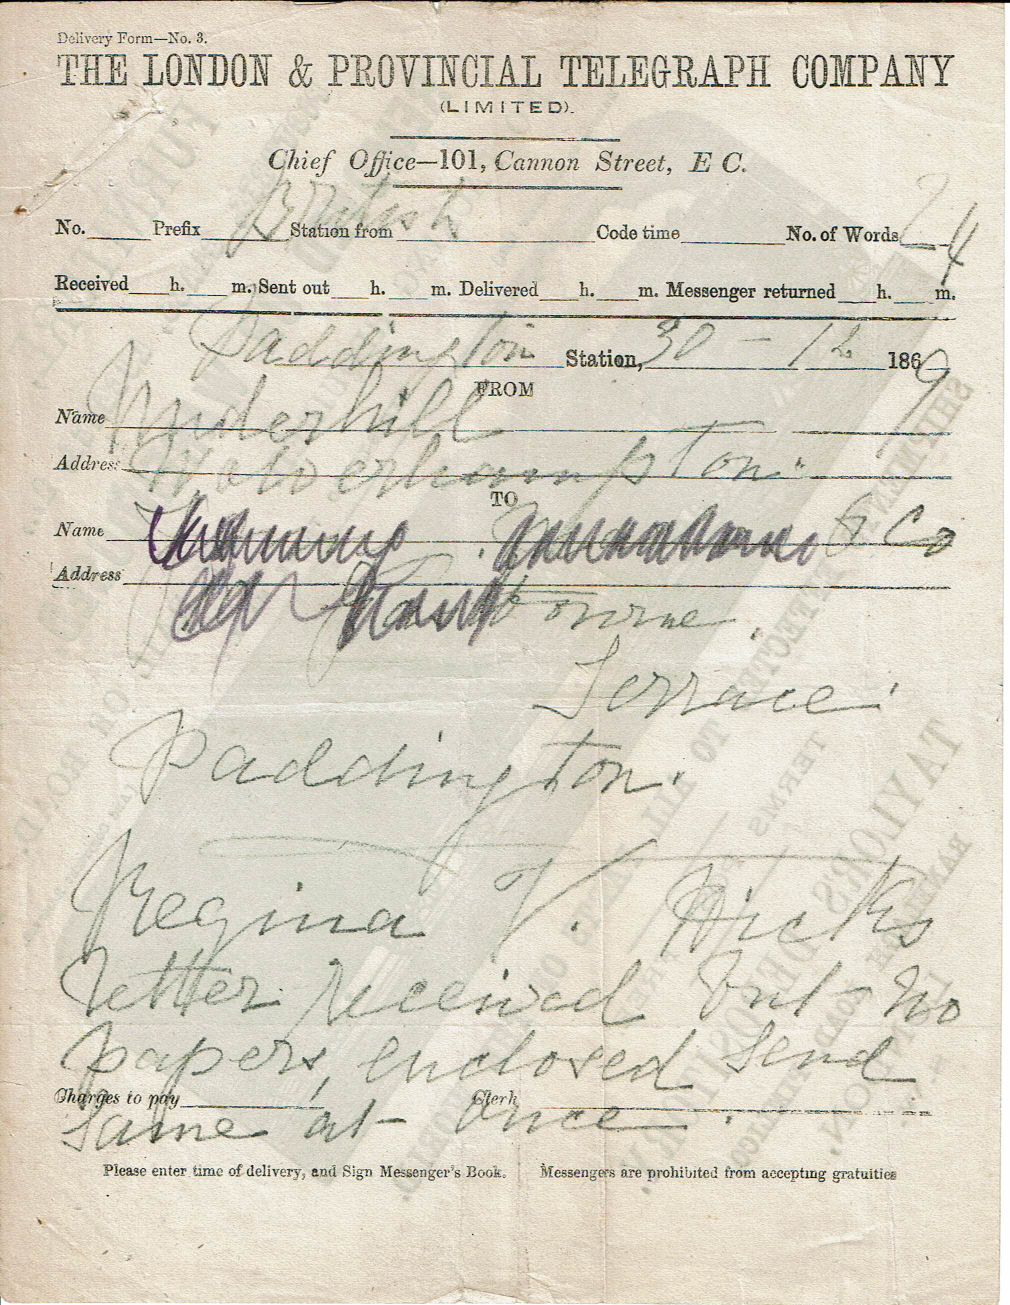 1869 LDTC Message form - Front